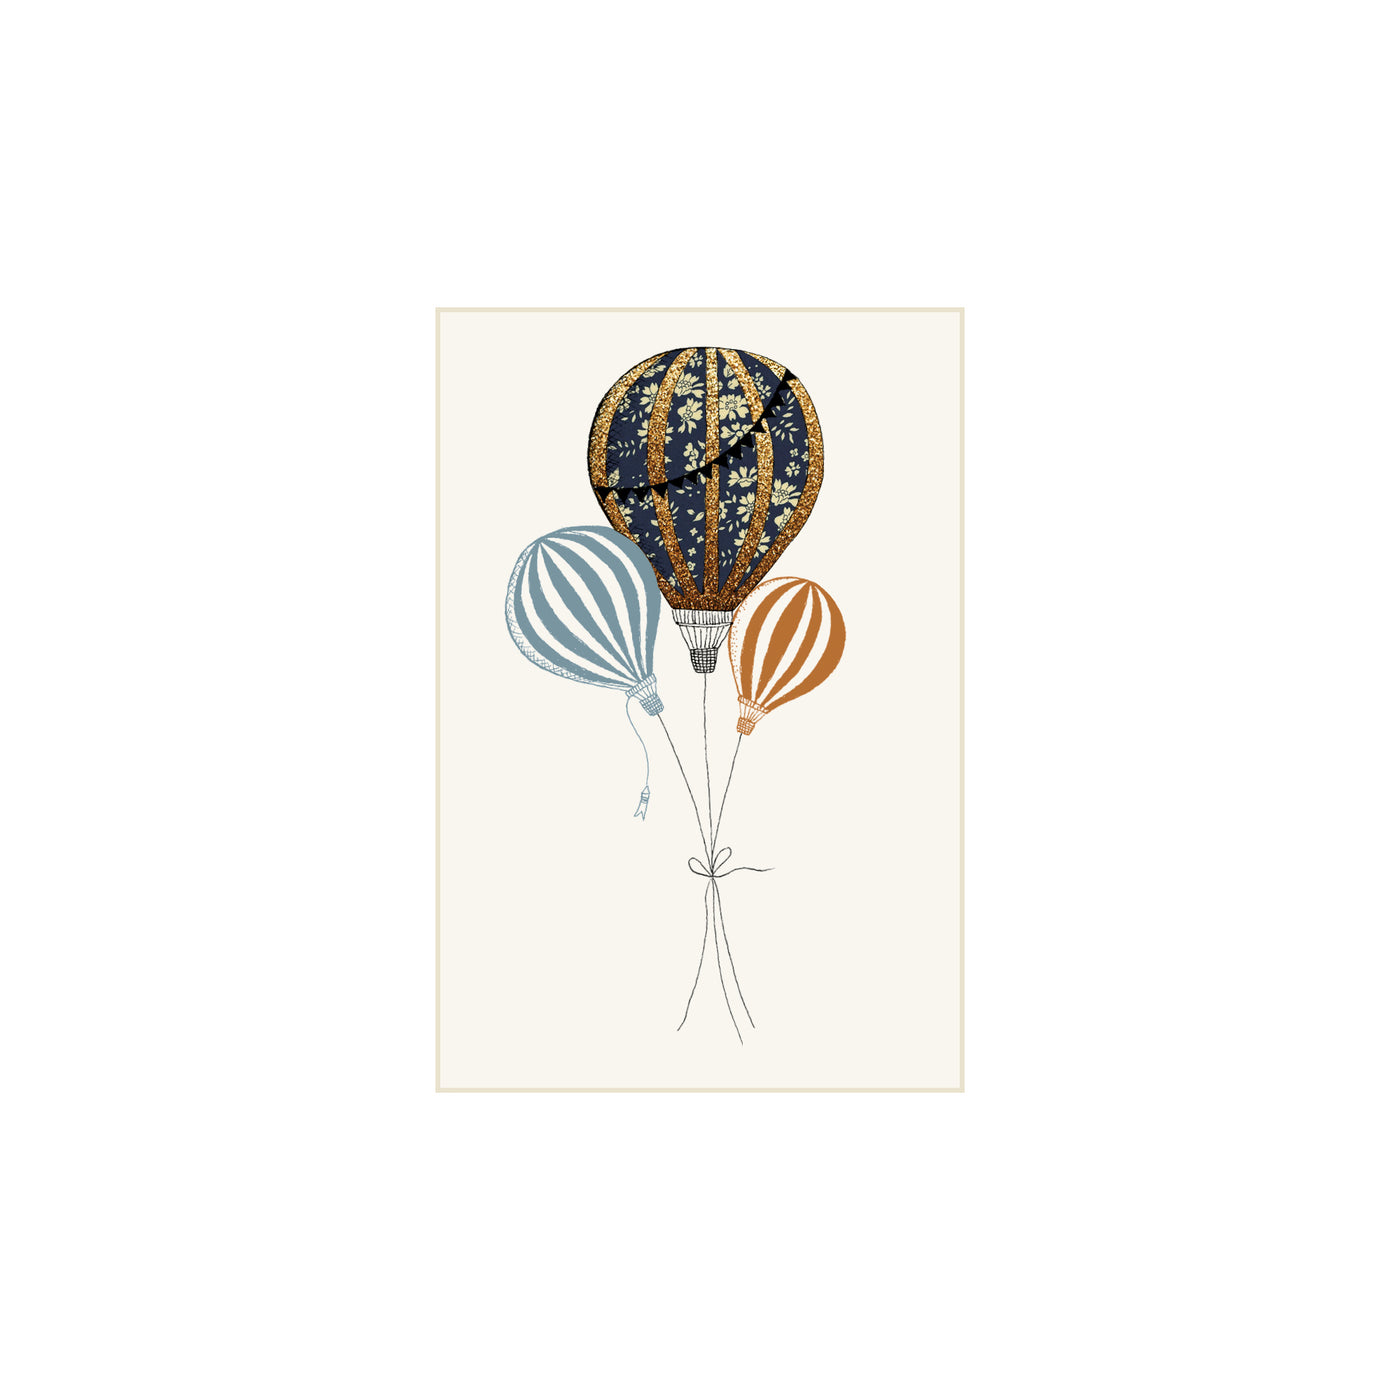 Karrusella print collection A7 kort, Liberty luftballon navy/blå/brun